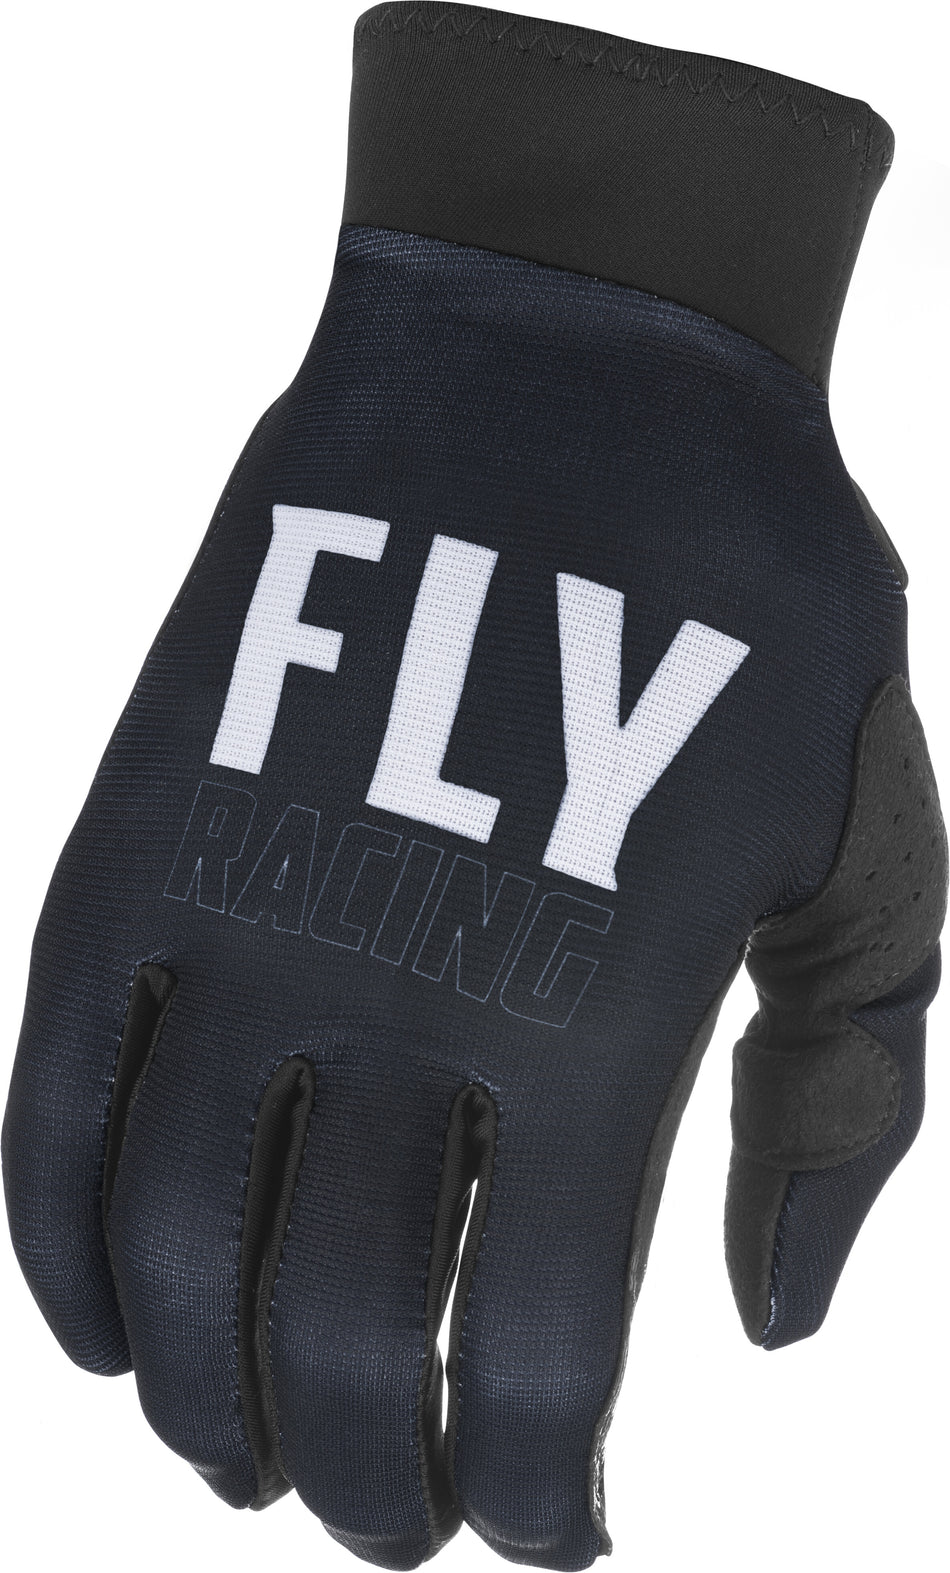 FLY RACING Pro Lite Gloves Black/White Sz 11 374-85011